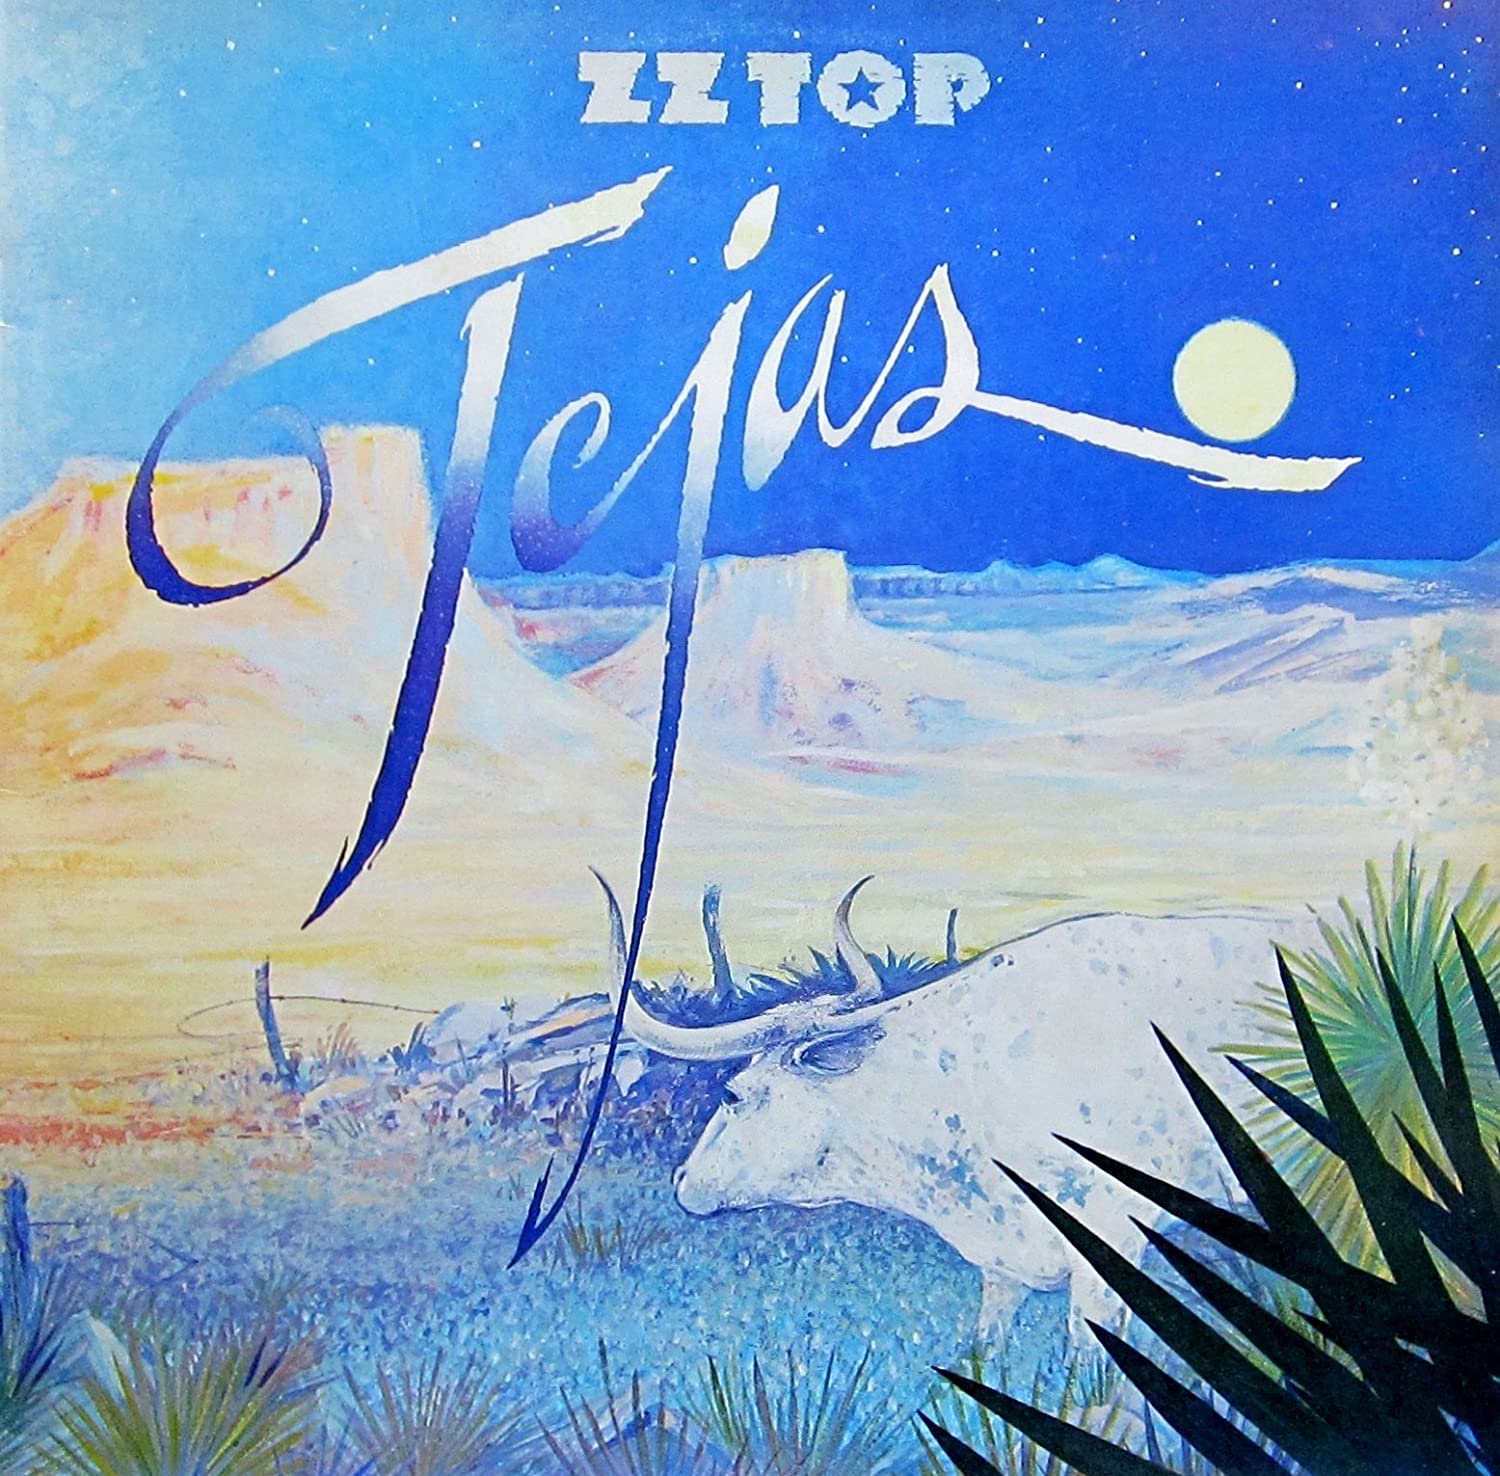 ZZ Top - Tejas - CD - New